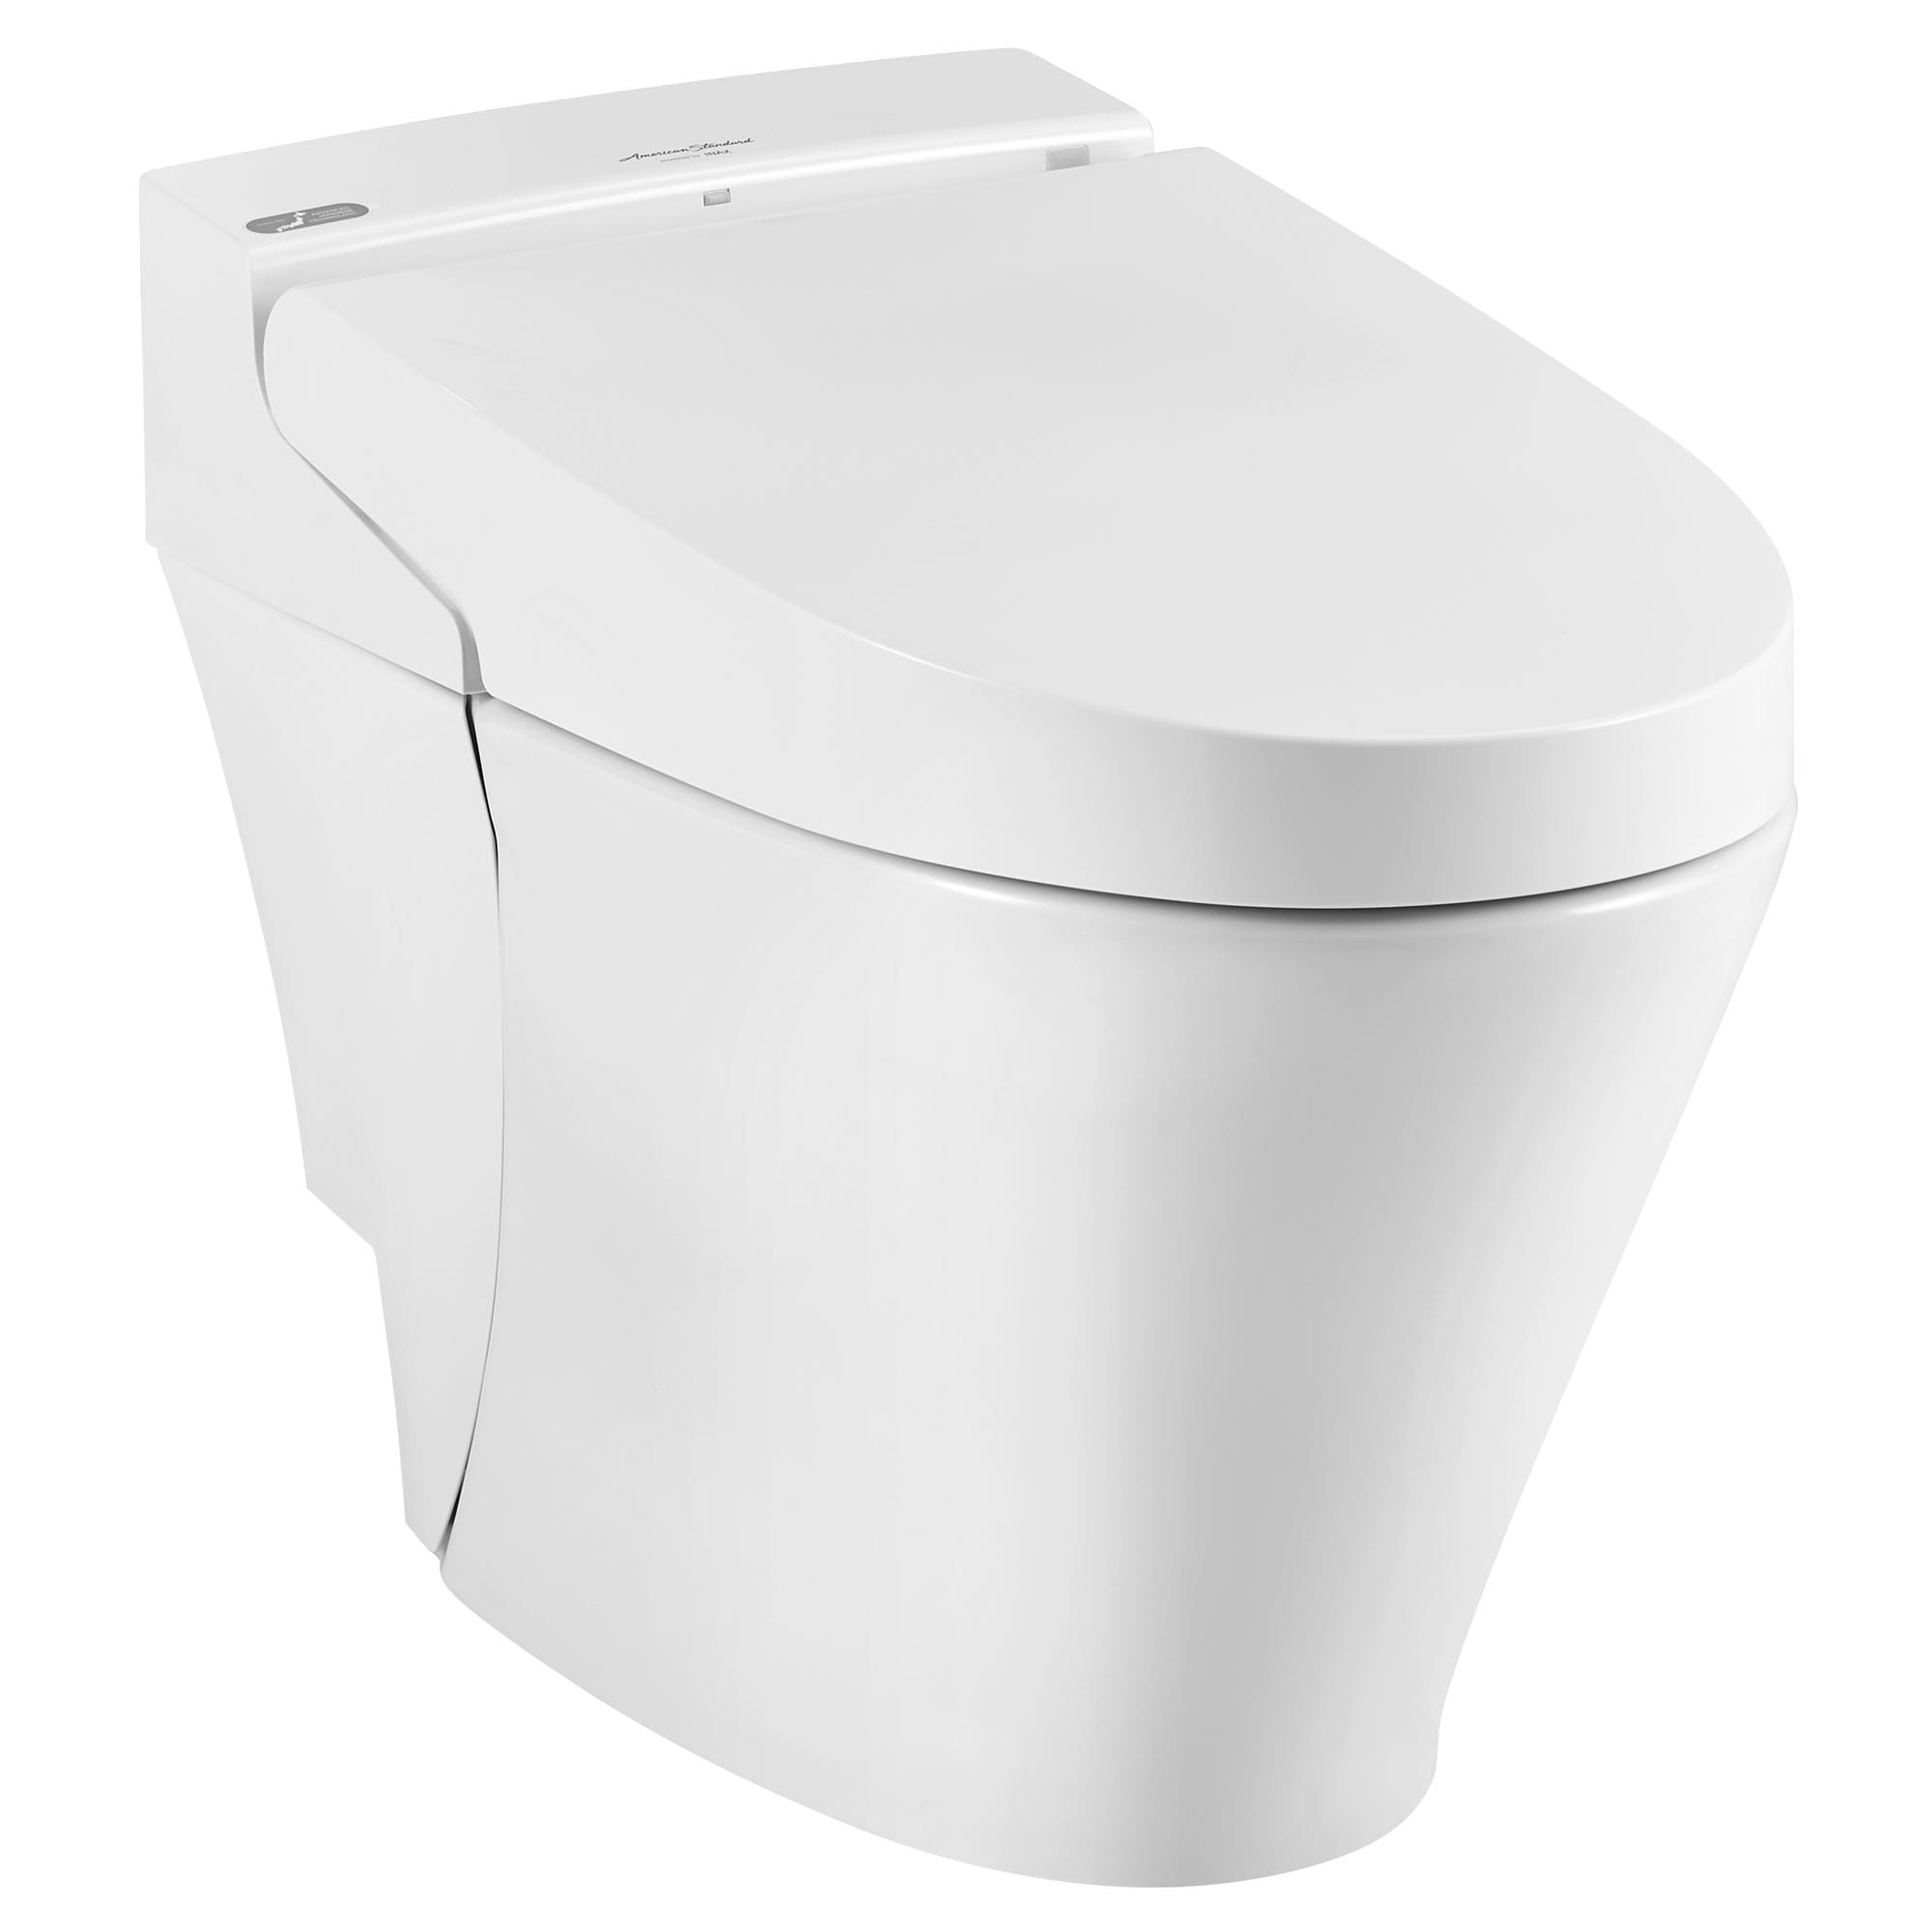 Advanced Clean 100 SpaLet Bidet Toilet Bowl